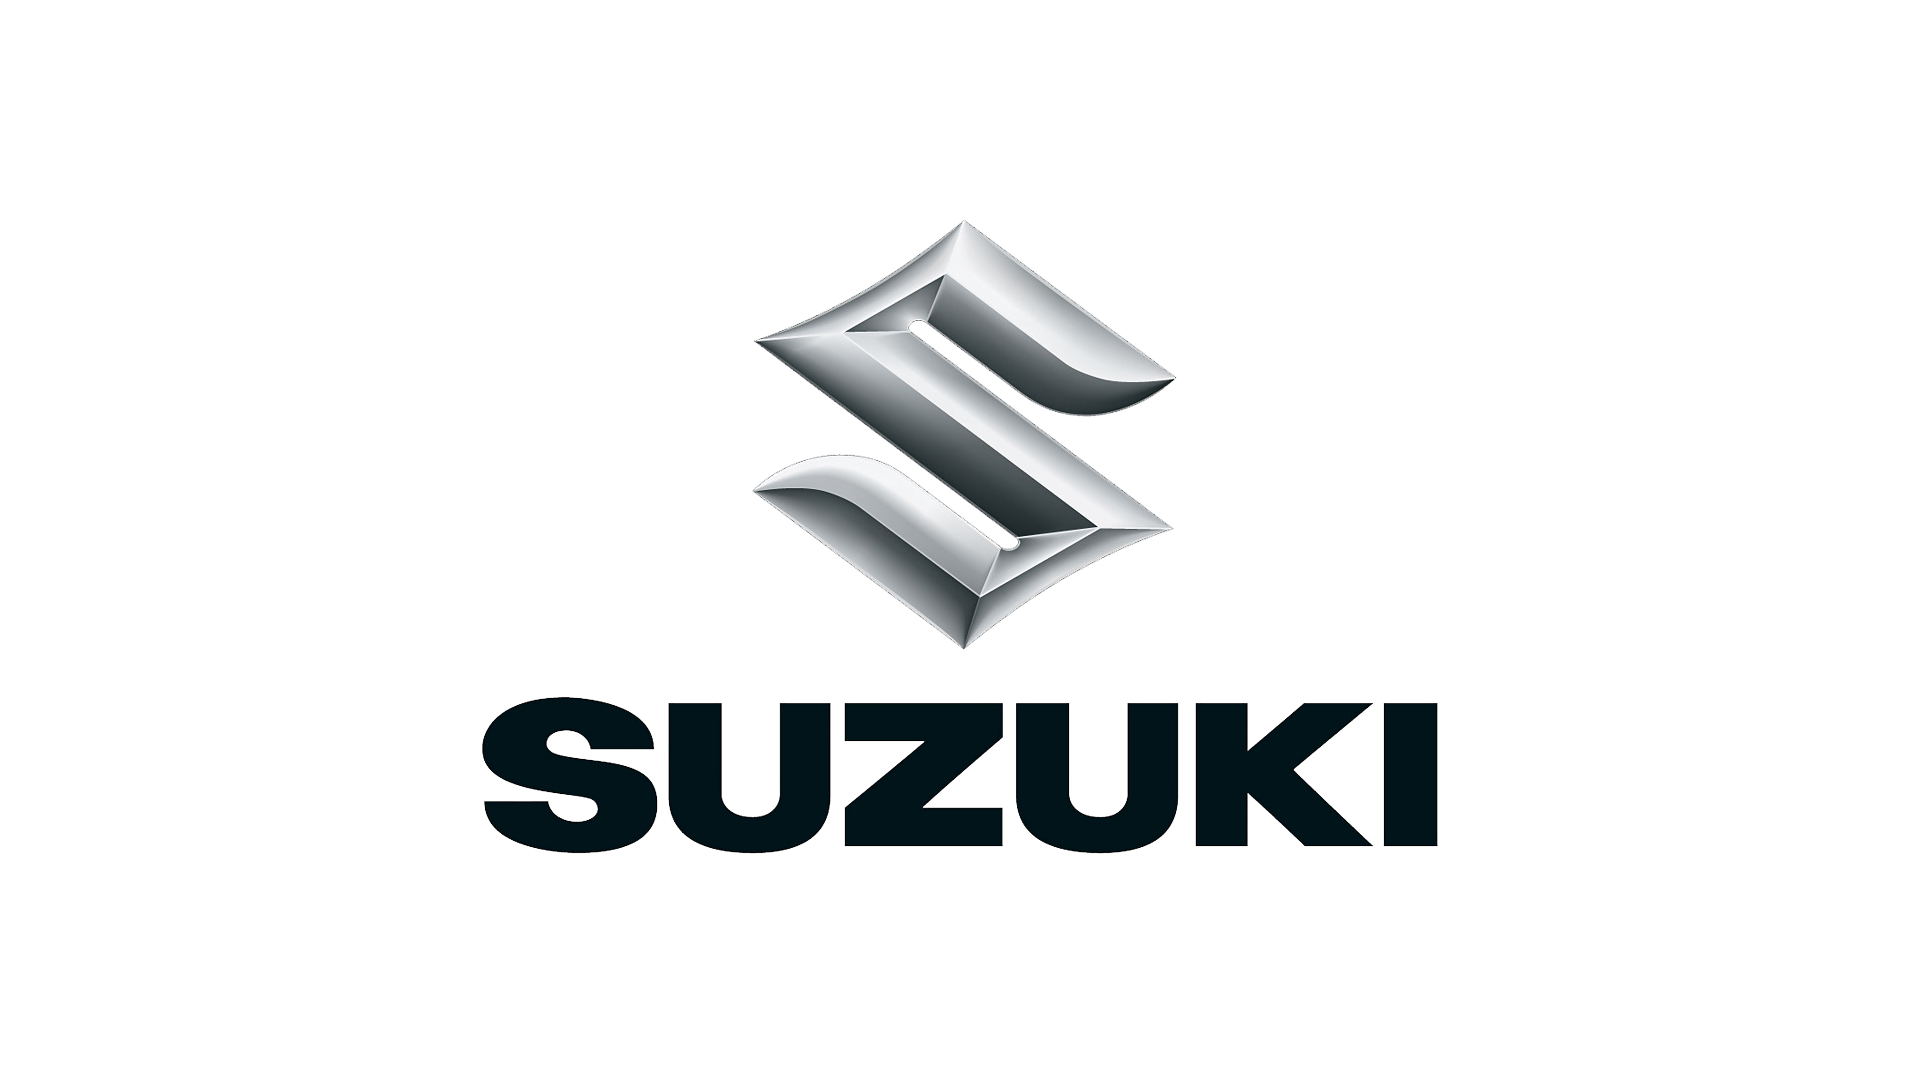 Suzuki logo brand car symbol with name design Vector Image